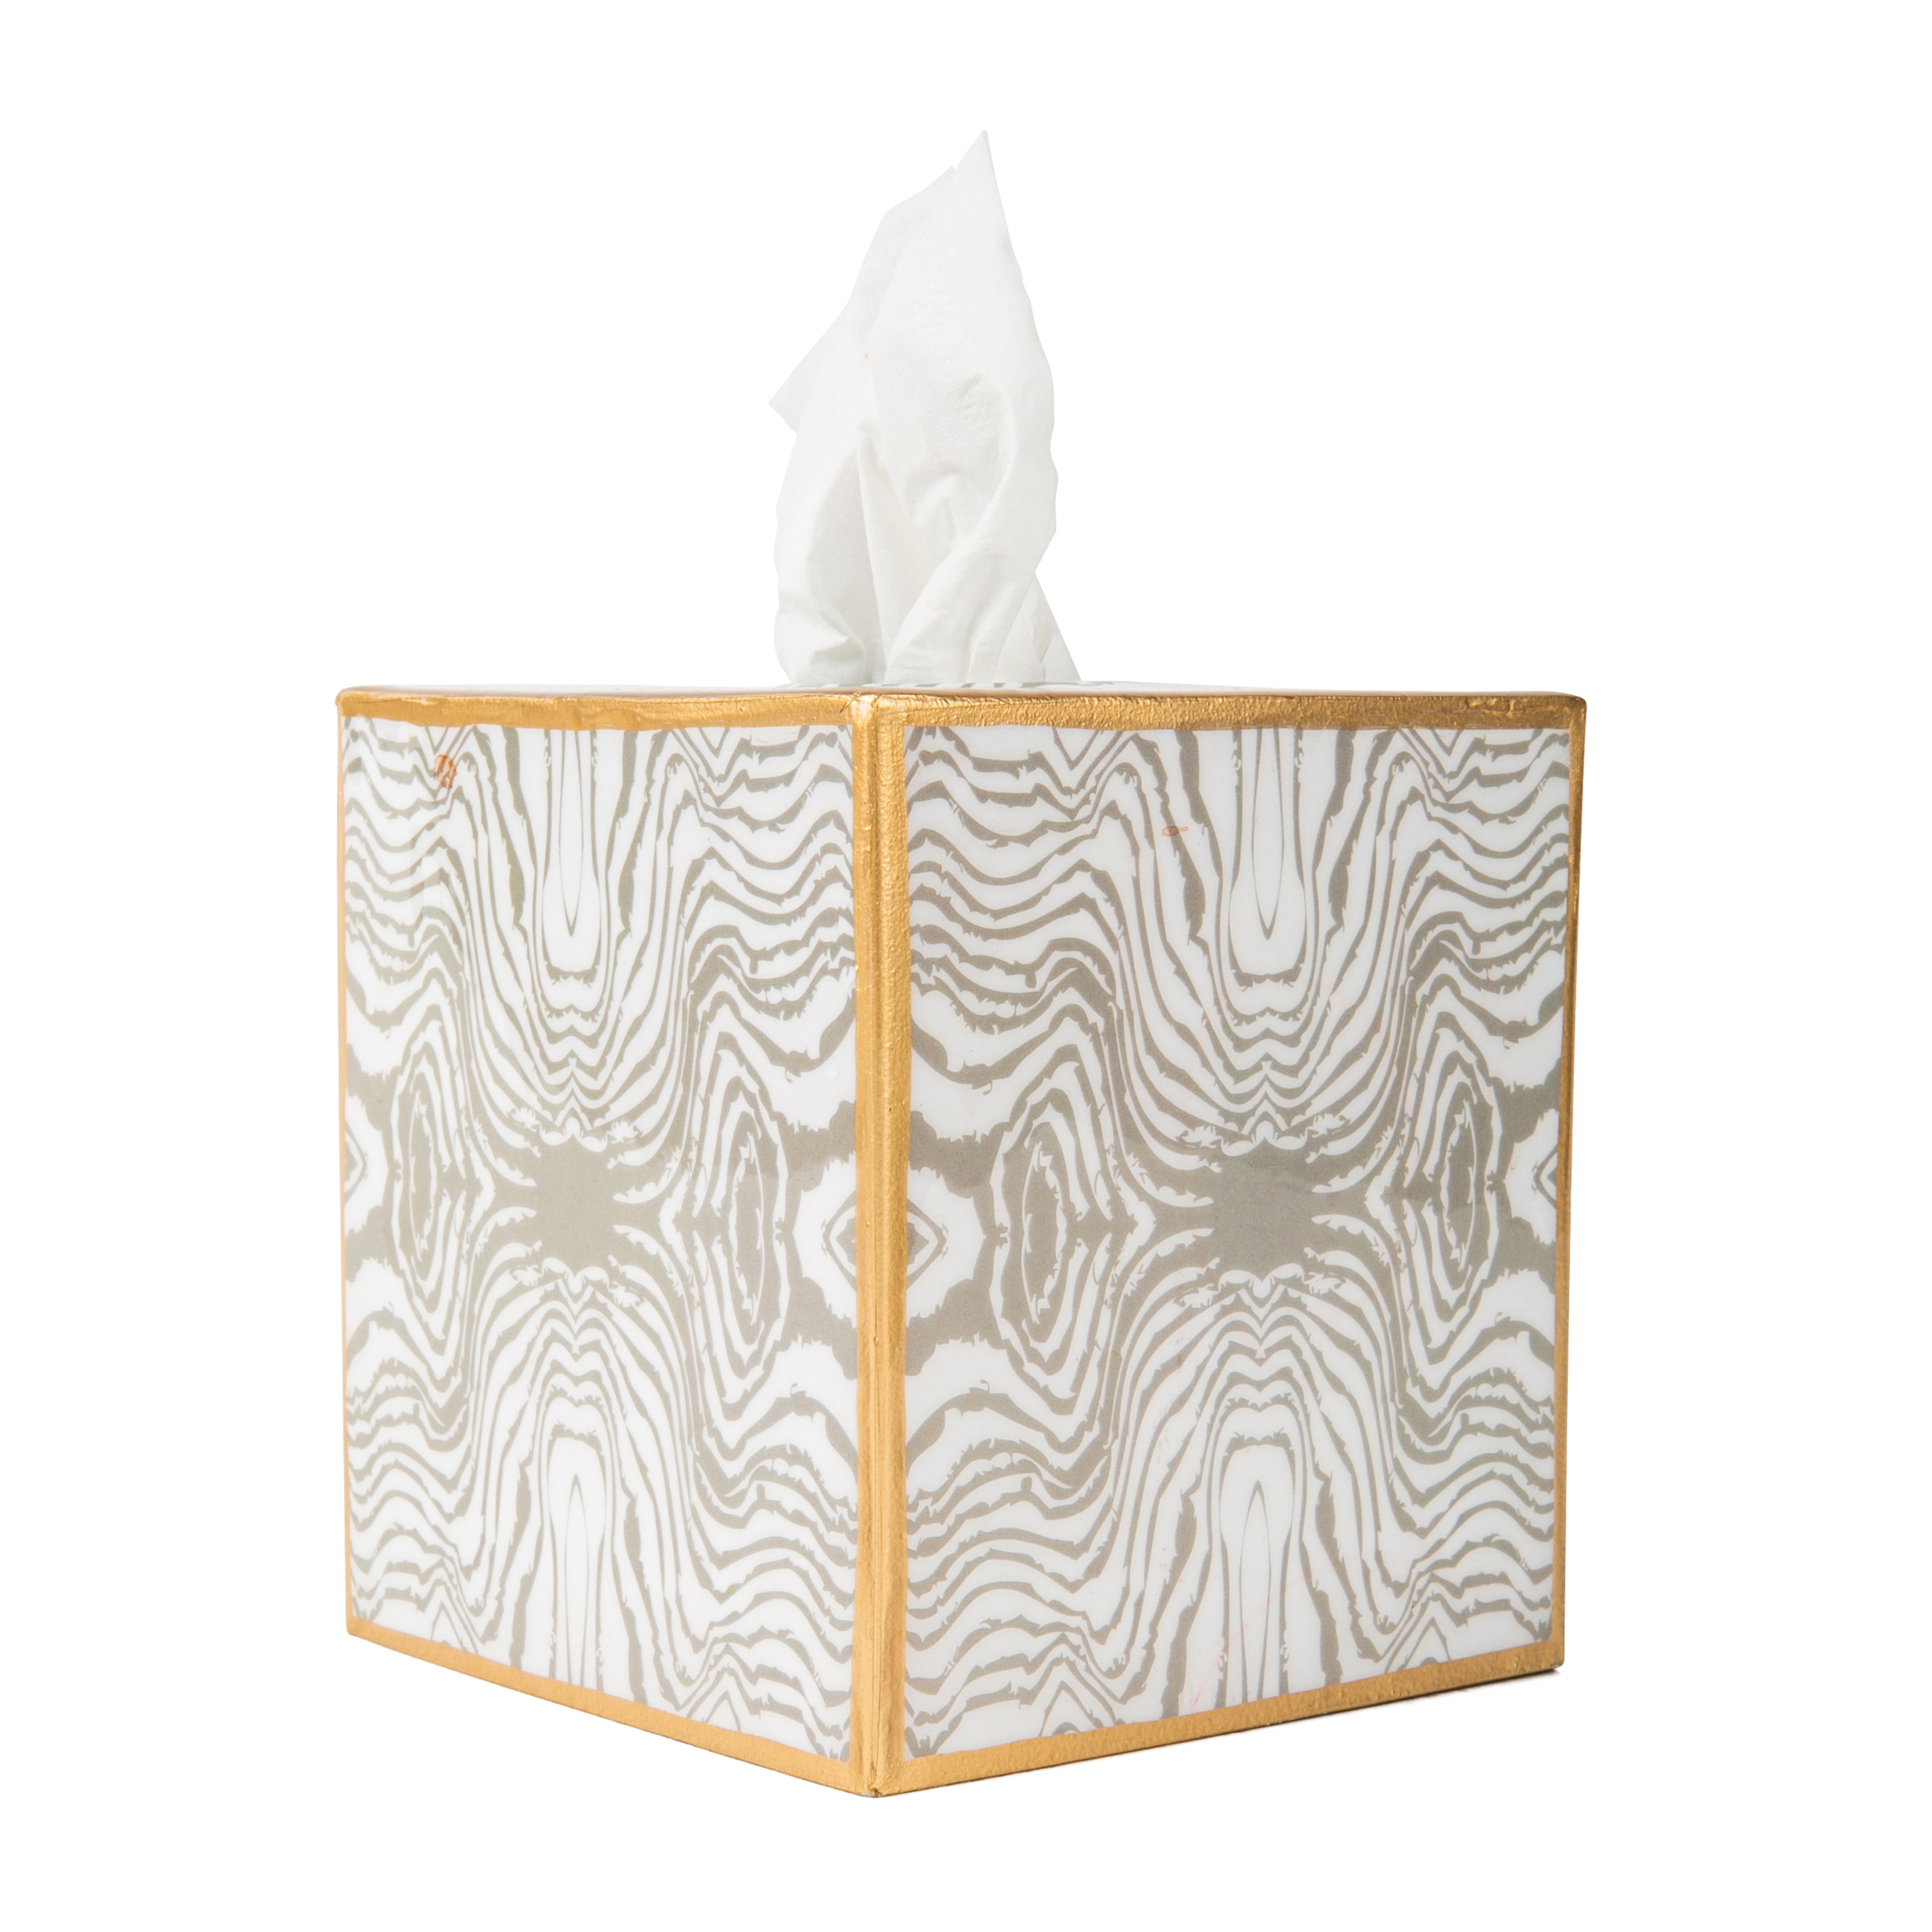 Faux Bois Enameled Tissue Box Cover